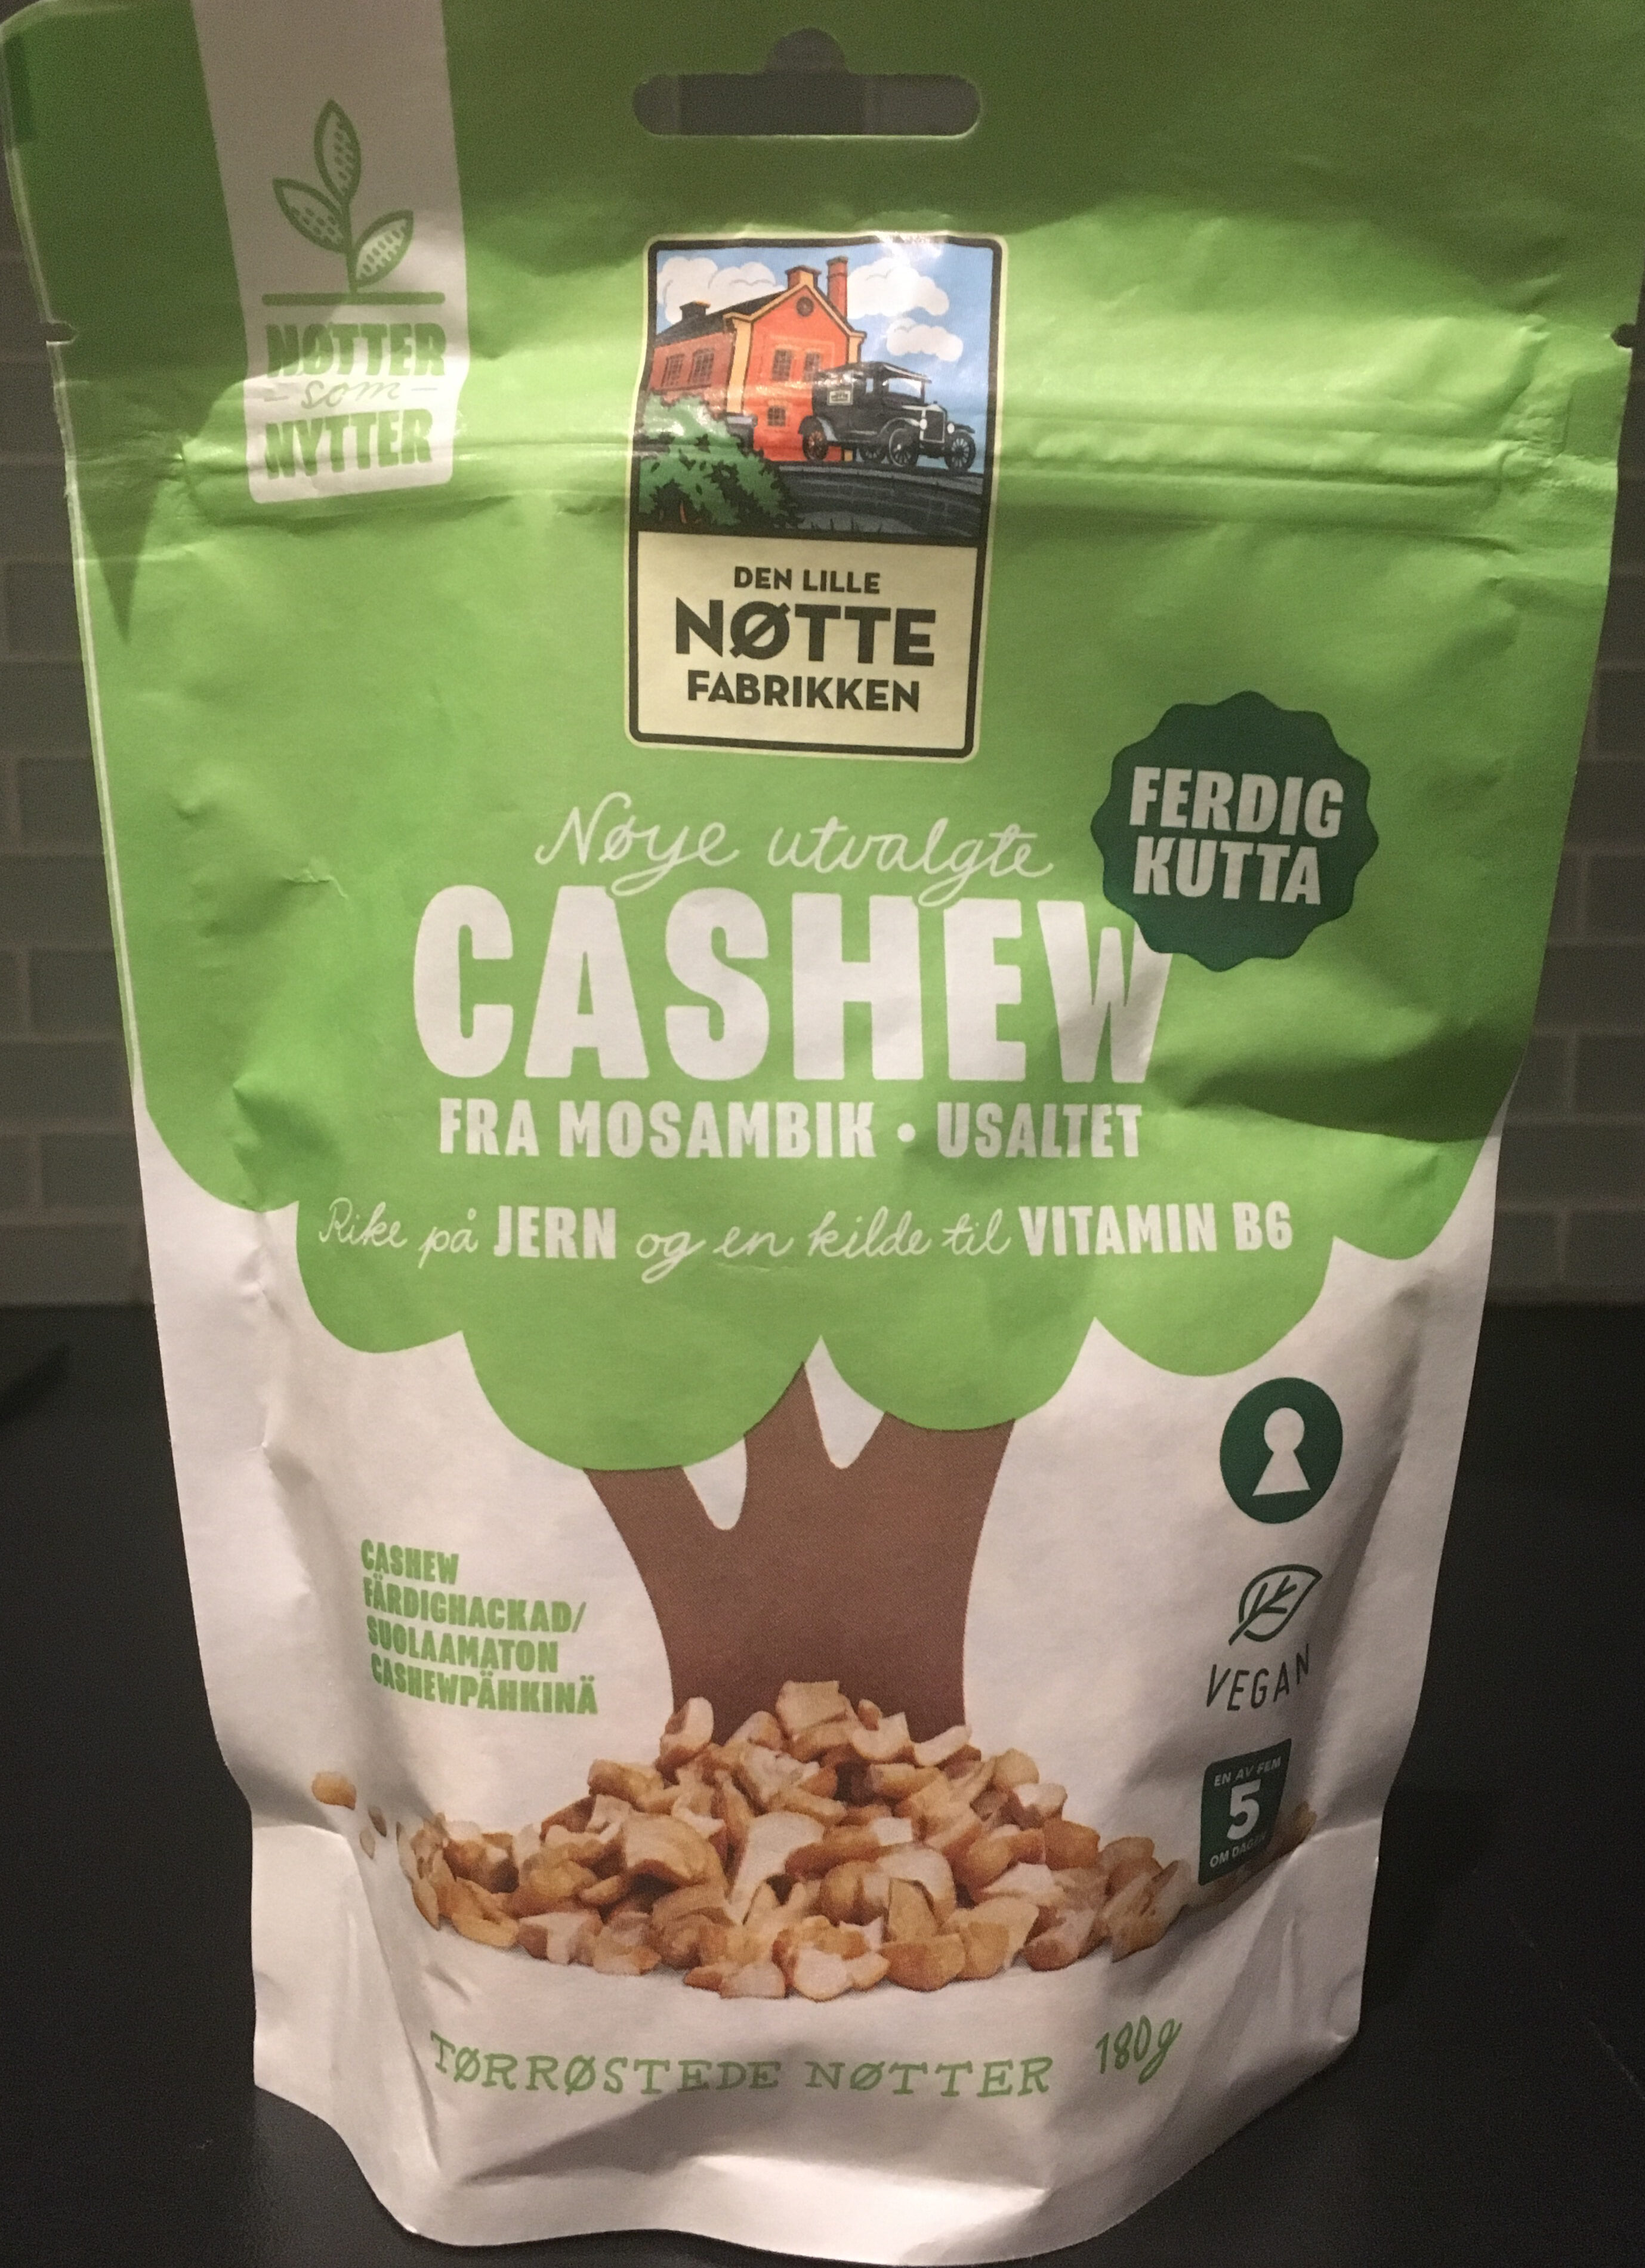 Cashew fra Mosambik - Usaltet - Product - nb